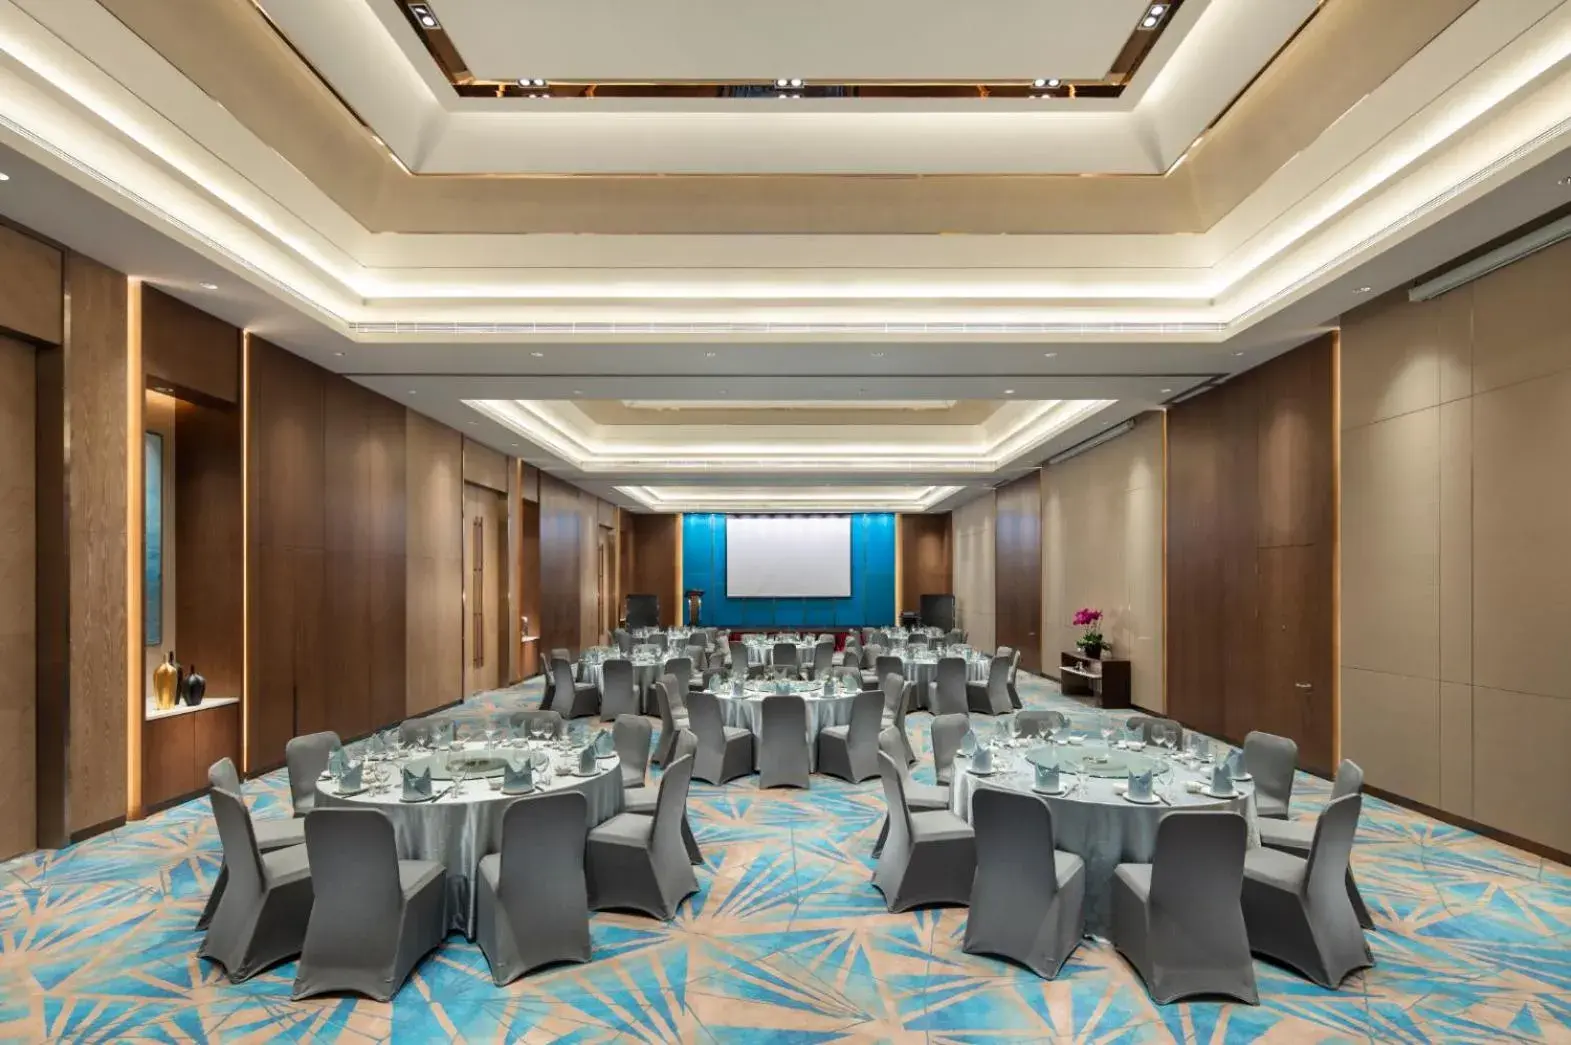 Meeting/conference room, Banquet Facilities in Hilton Garden Inn Sanya, China